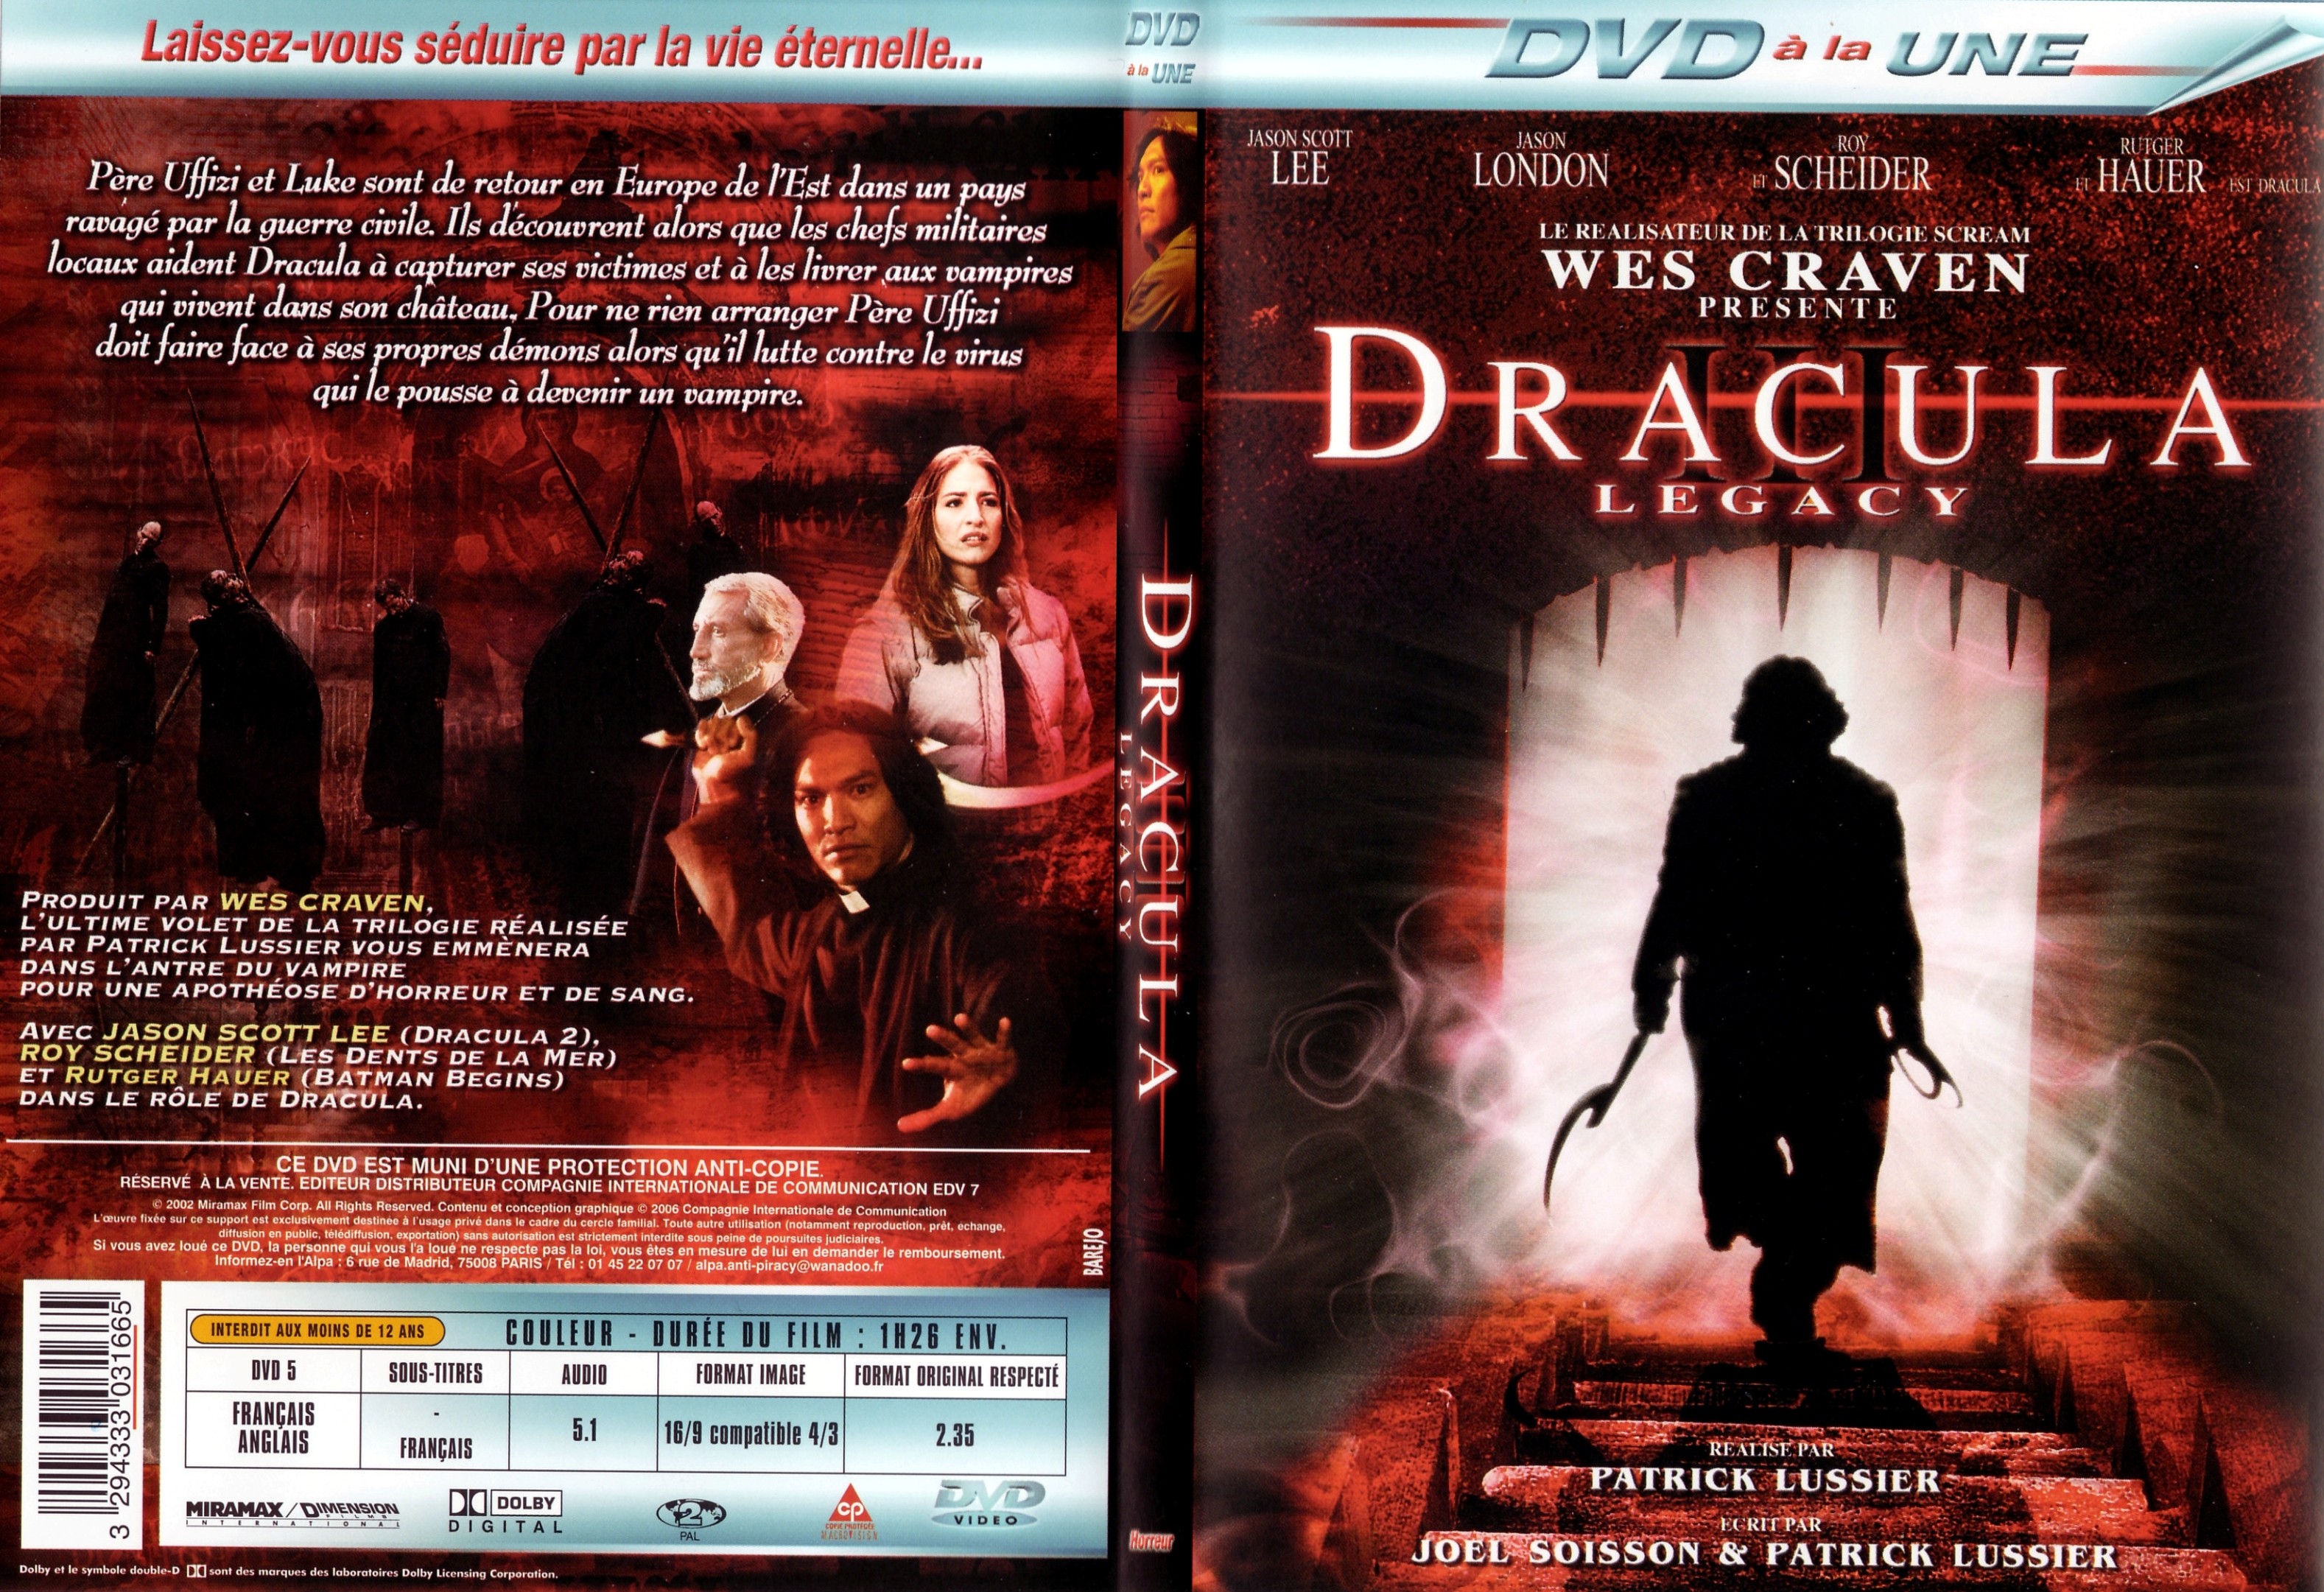 Jaquette DVD Dracula 3 legacy - SLIM